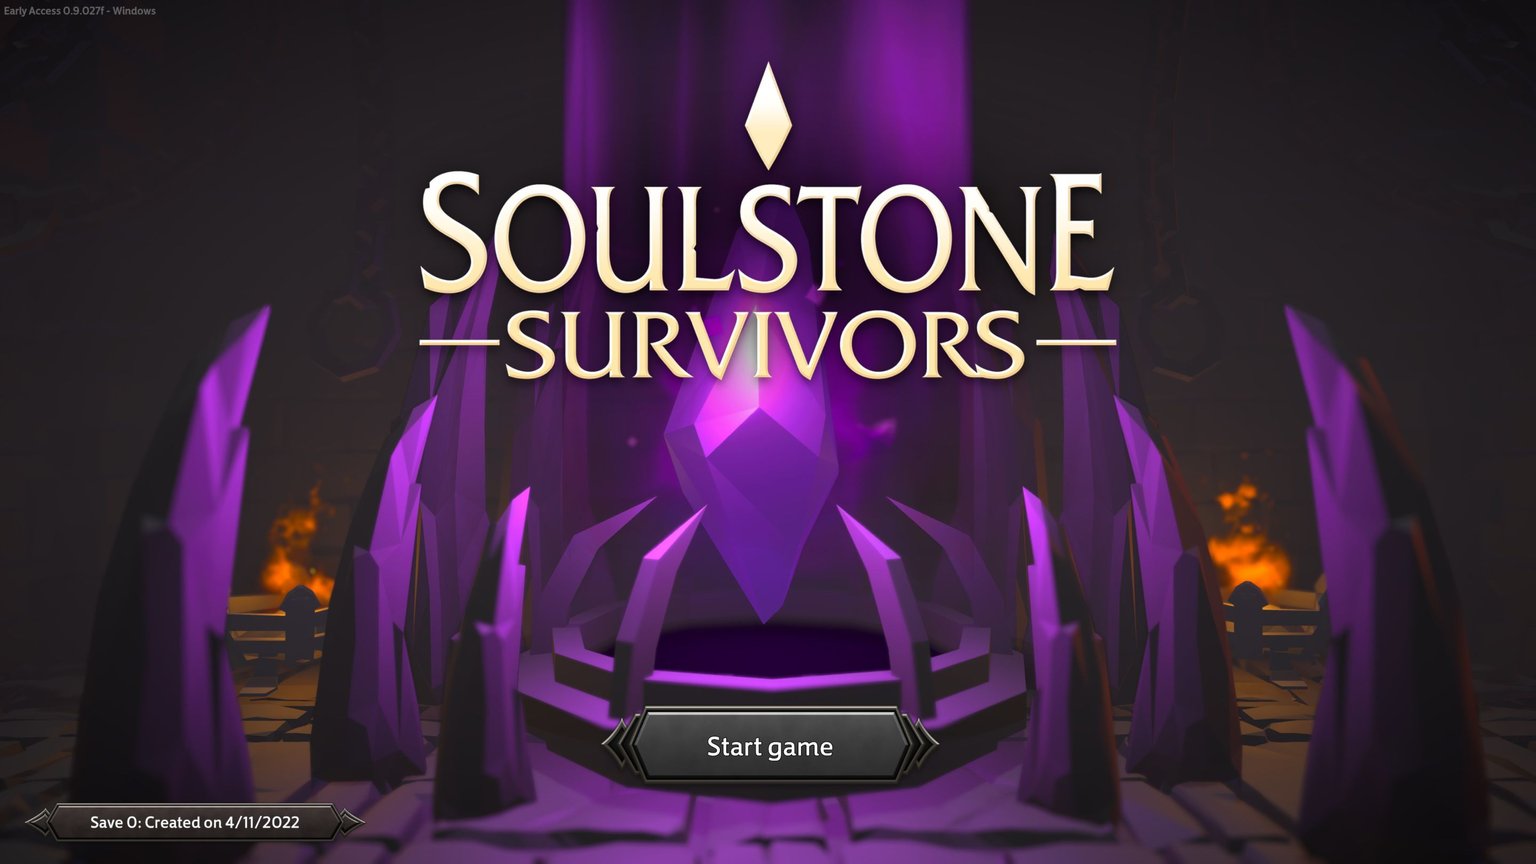 Soulstone Survivors gameplay - first look